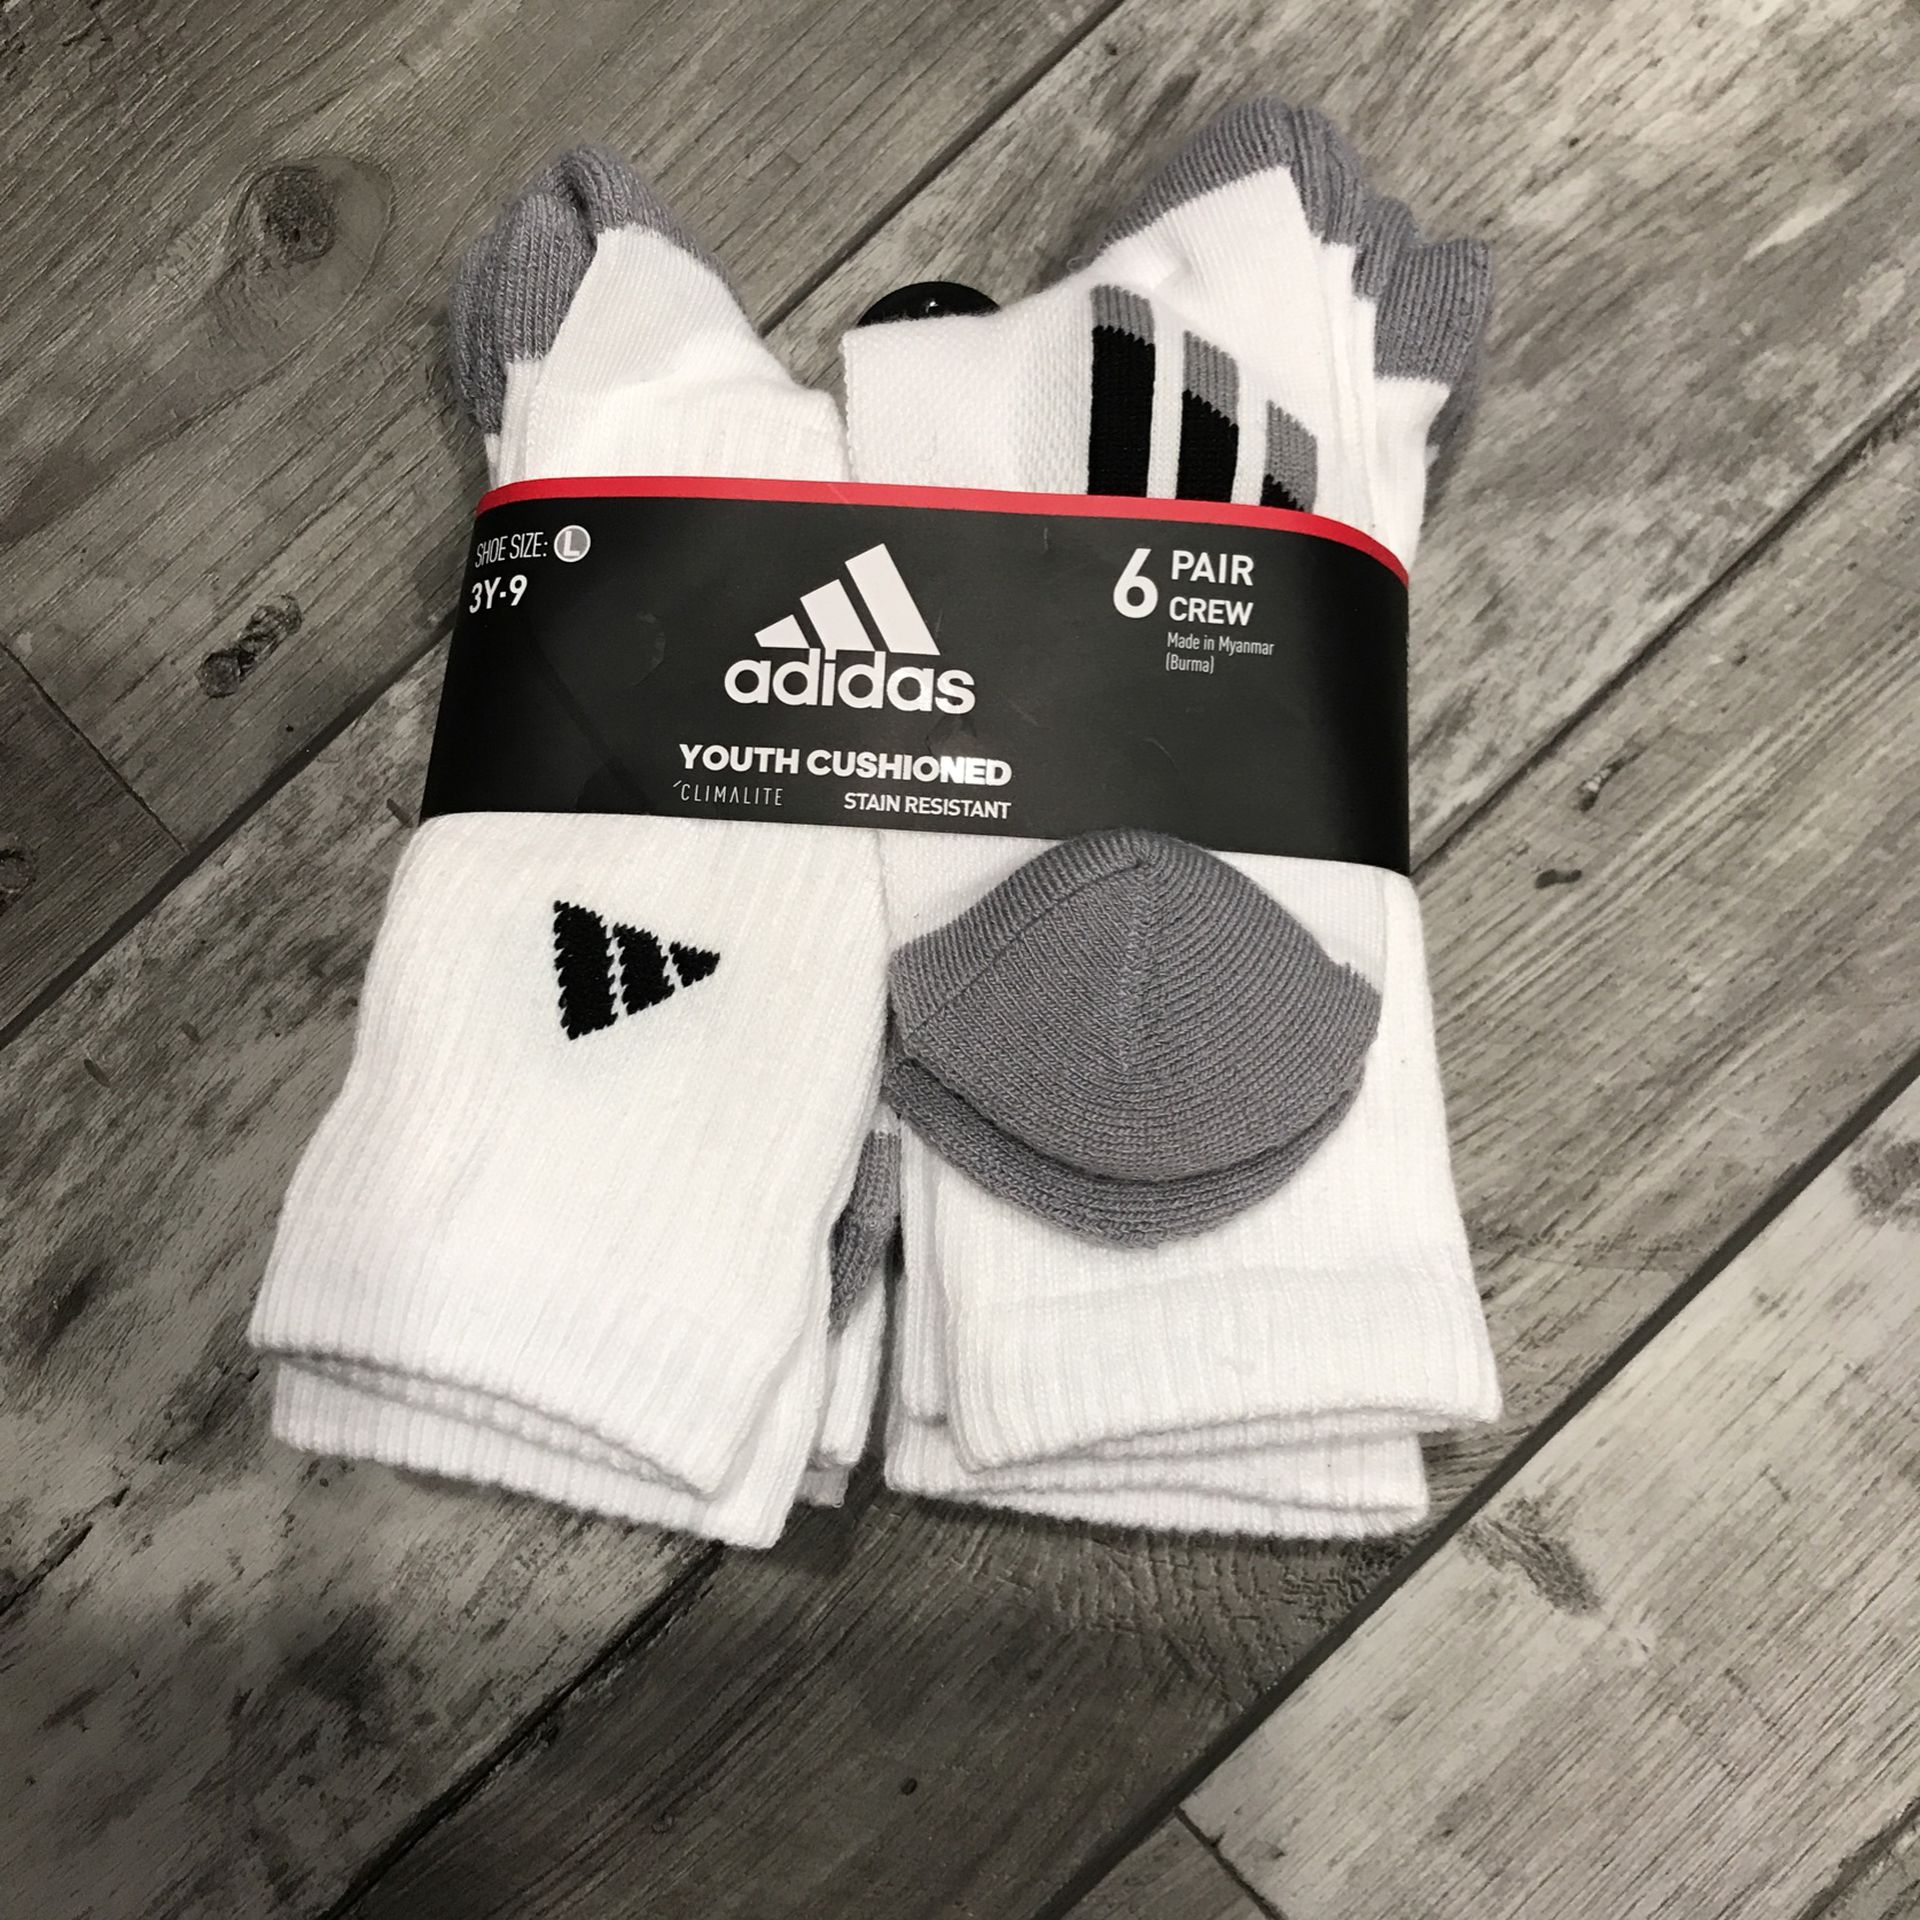 Adidas Socks Large 3y/9